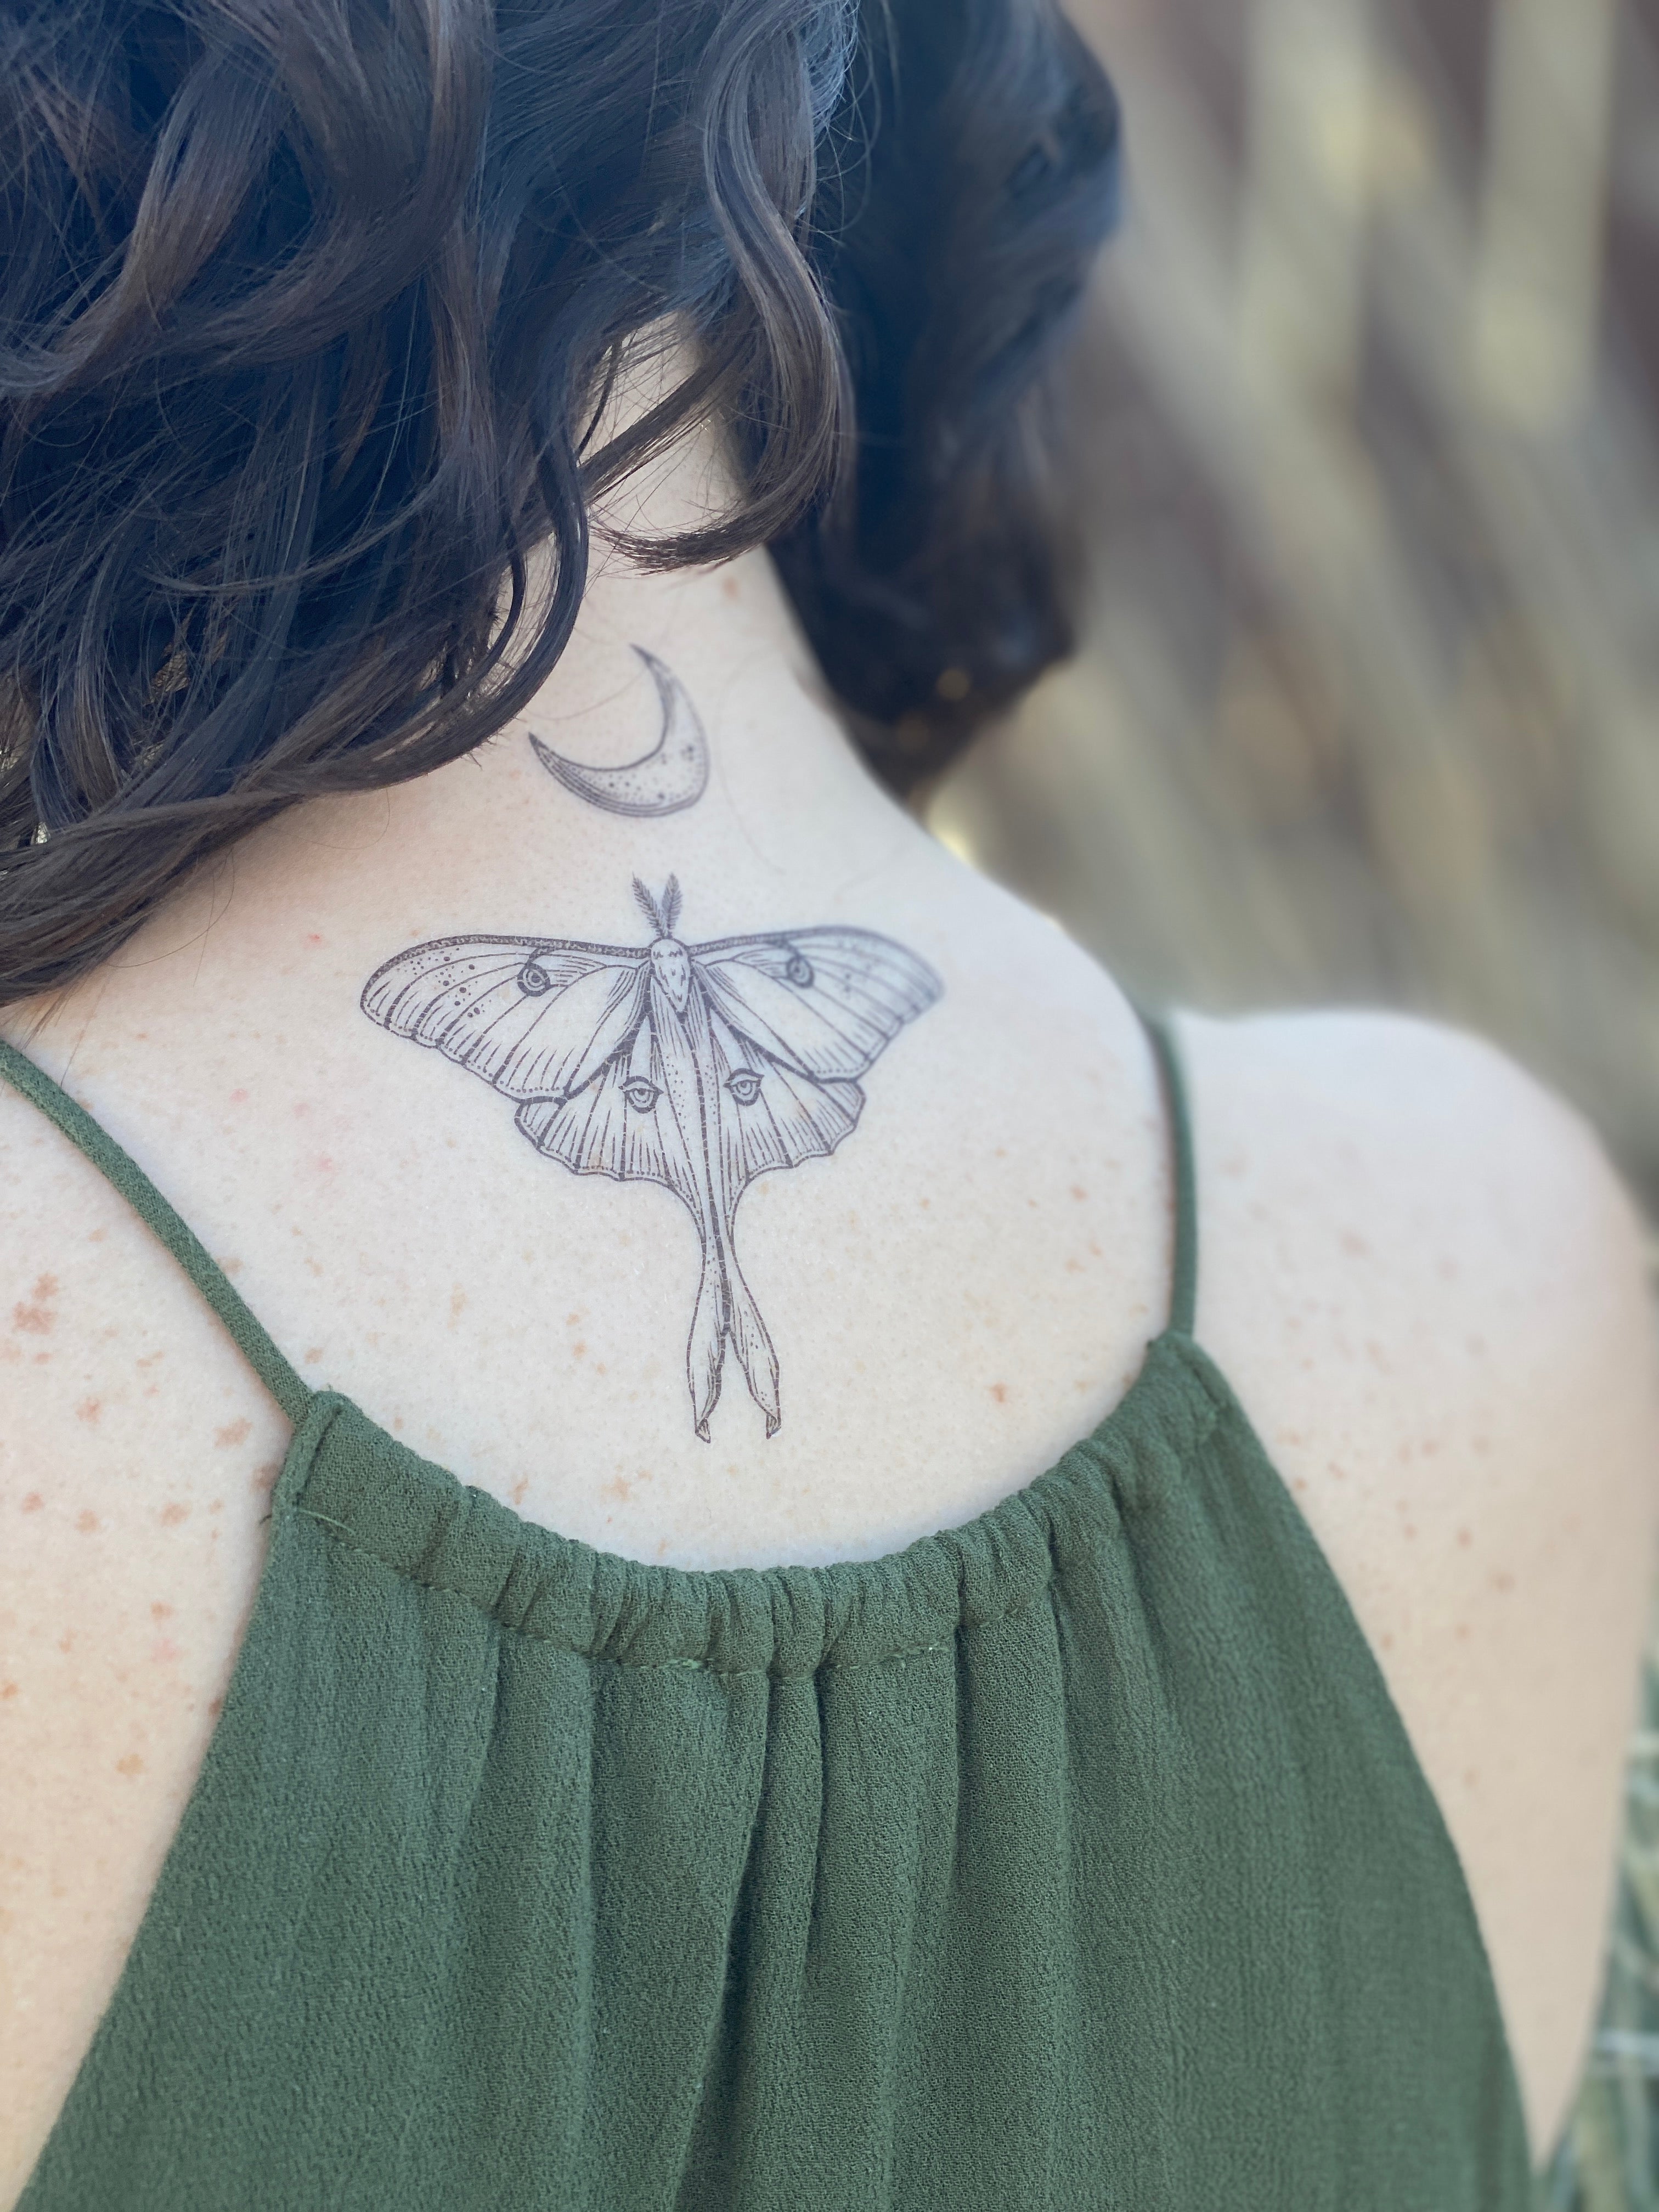 Spanish Moon Moth Mens Back Tattoo